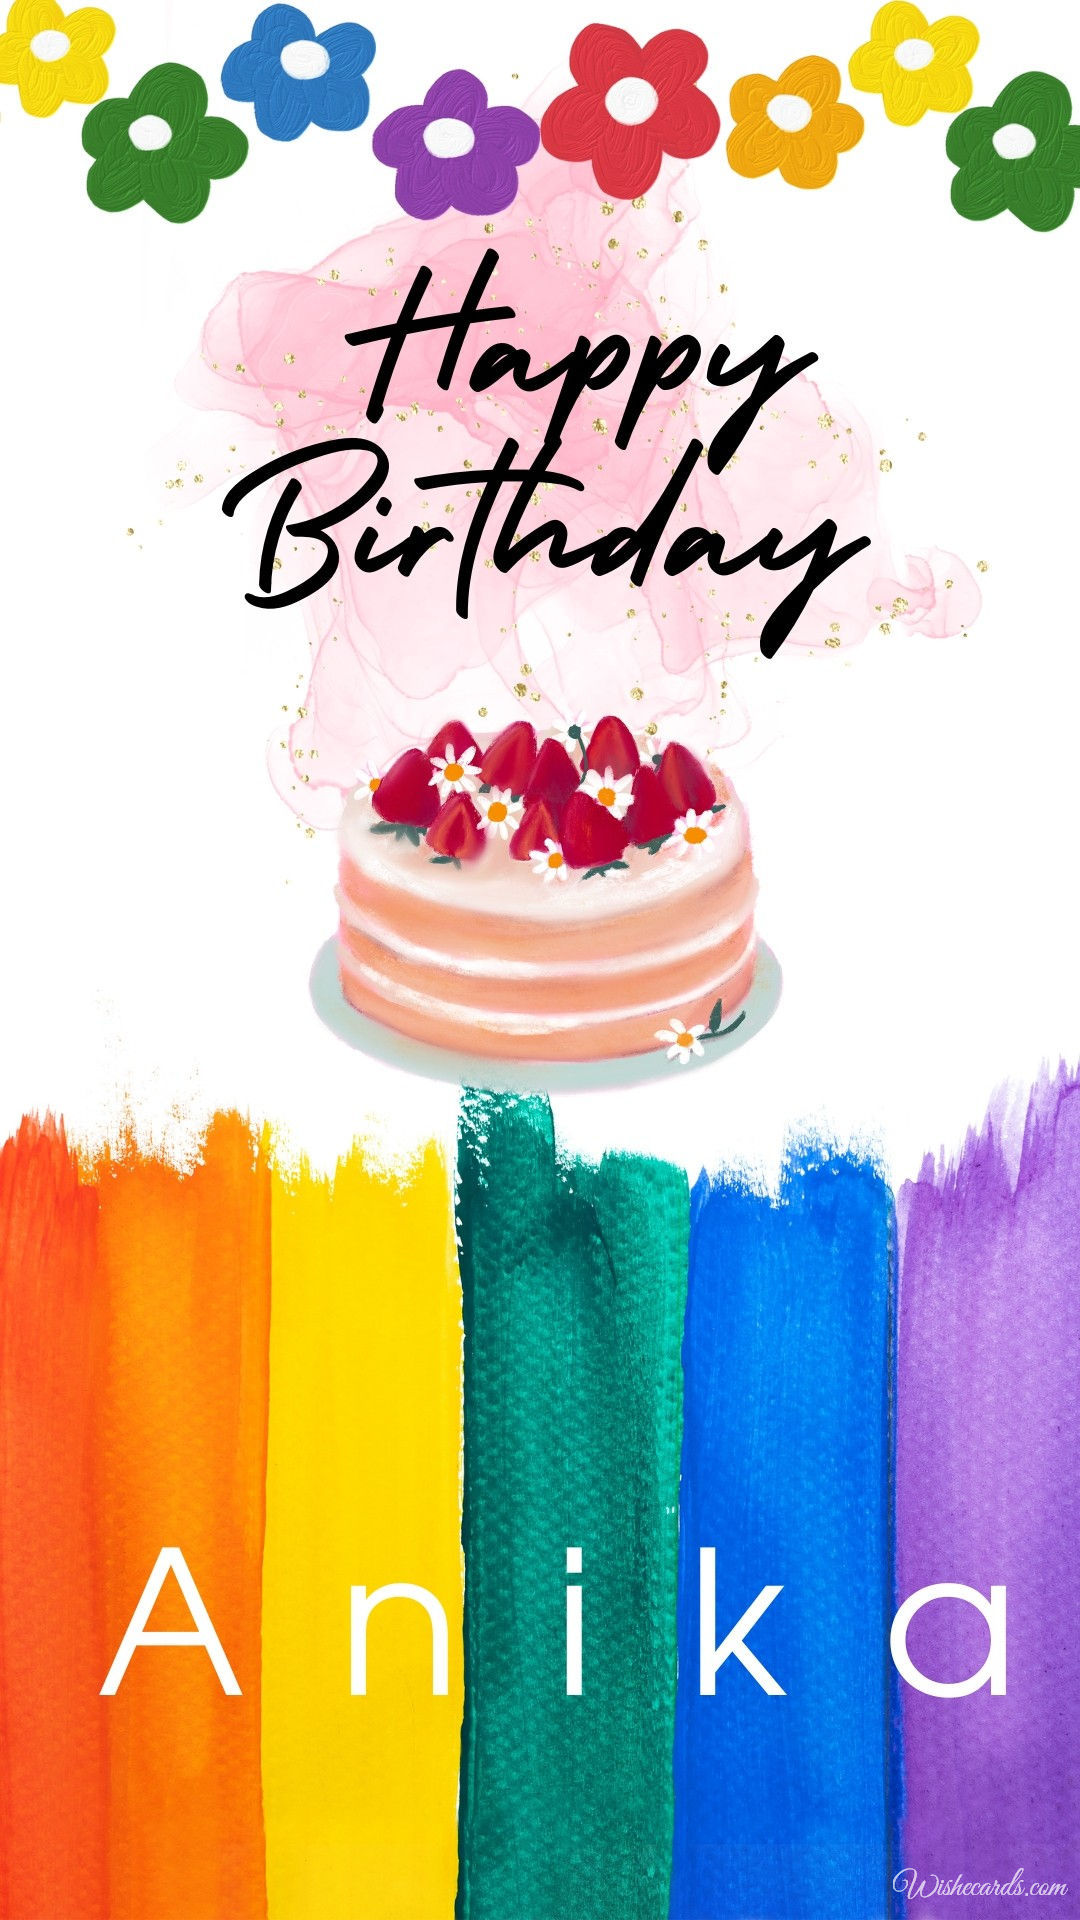 Happy Birthday Anika Cake Image